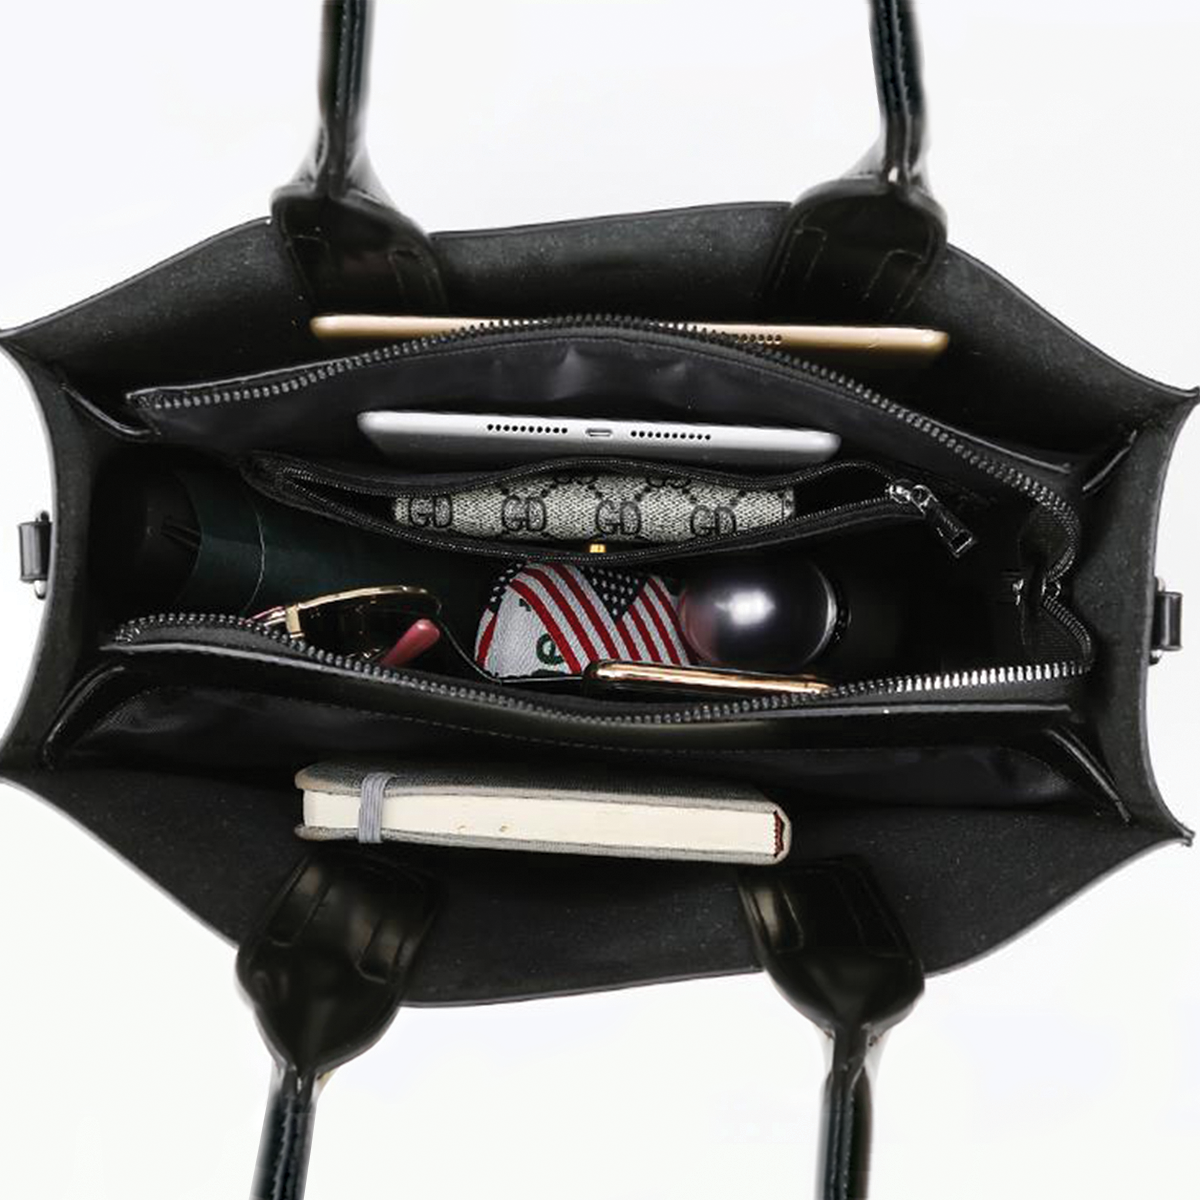 Coton De Tulear Luxury Handbag V1